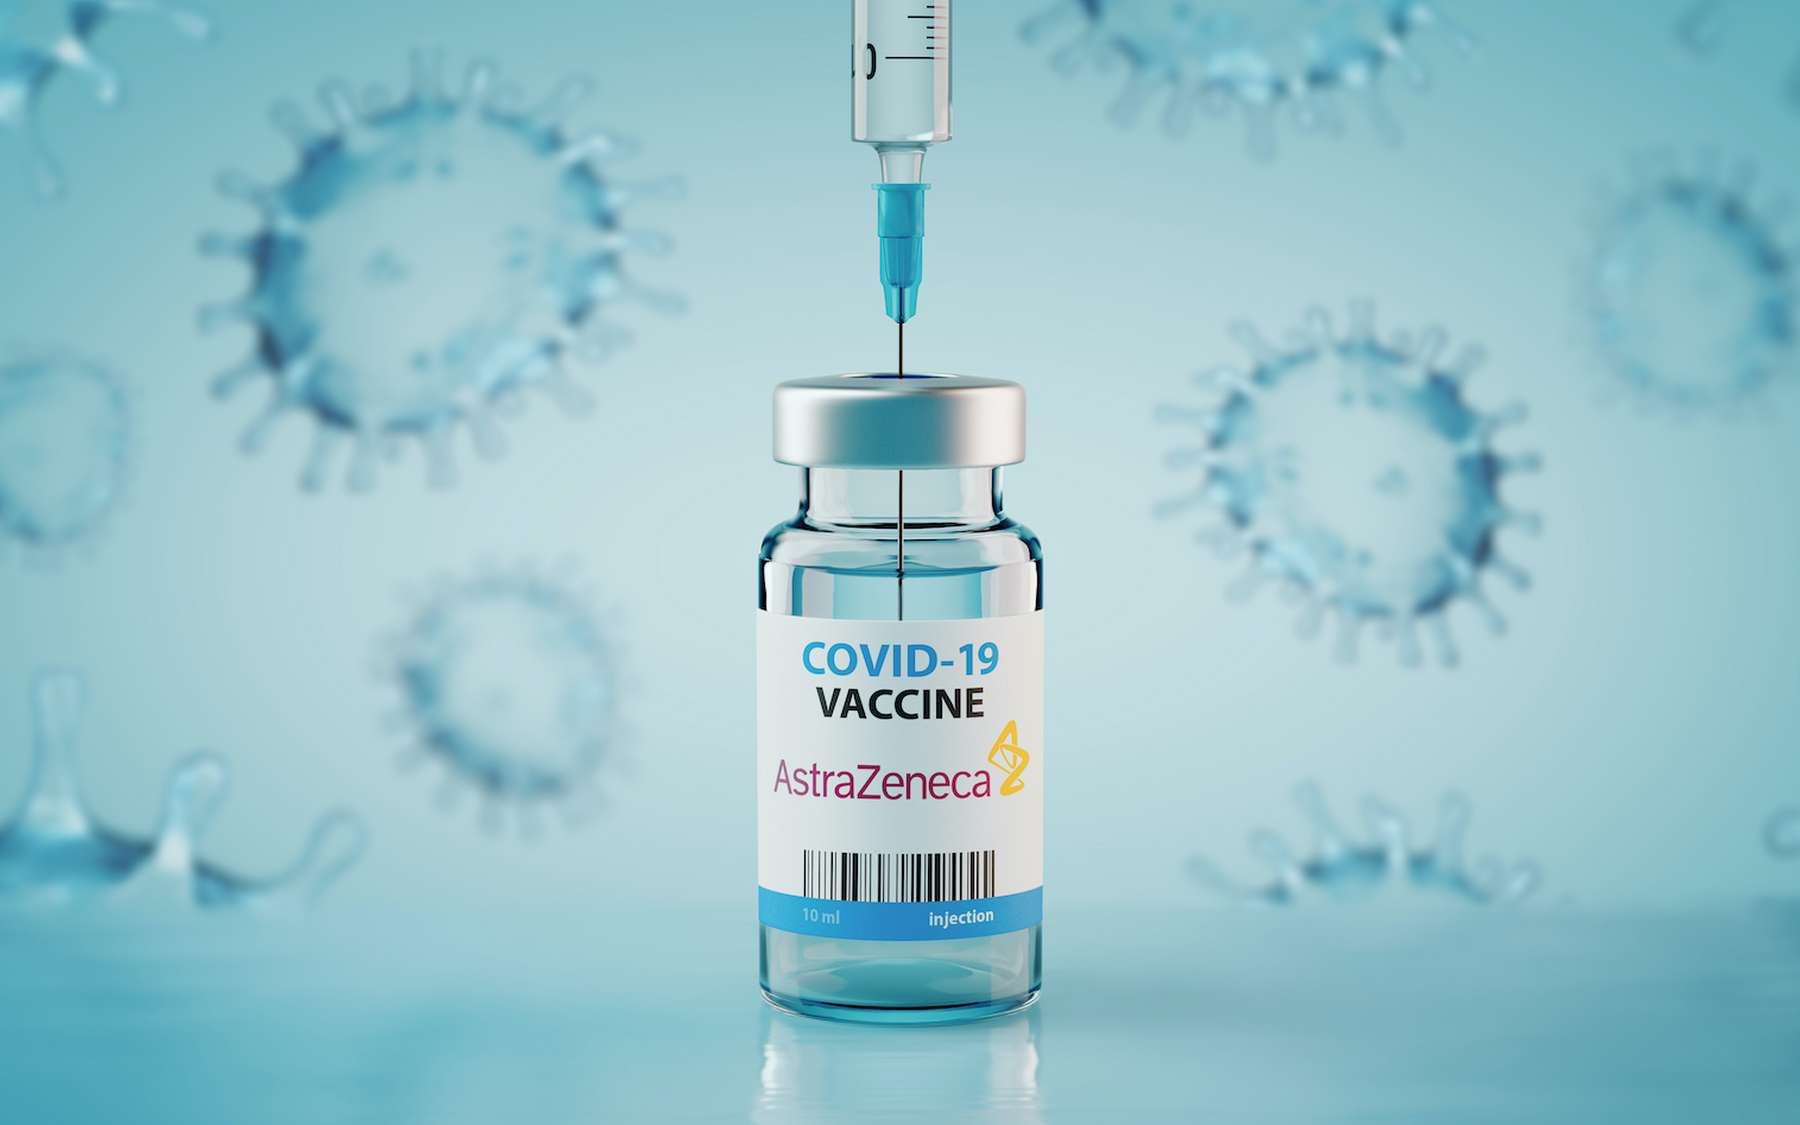 Le vaccin AstraZeneca est soupçonné de provoquer des thromboses dans de très rares cas. © Feydzhet Shabanov, Adobe Stock